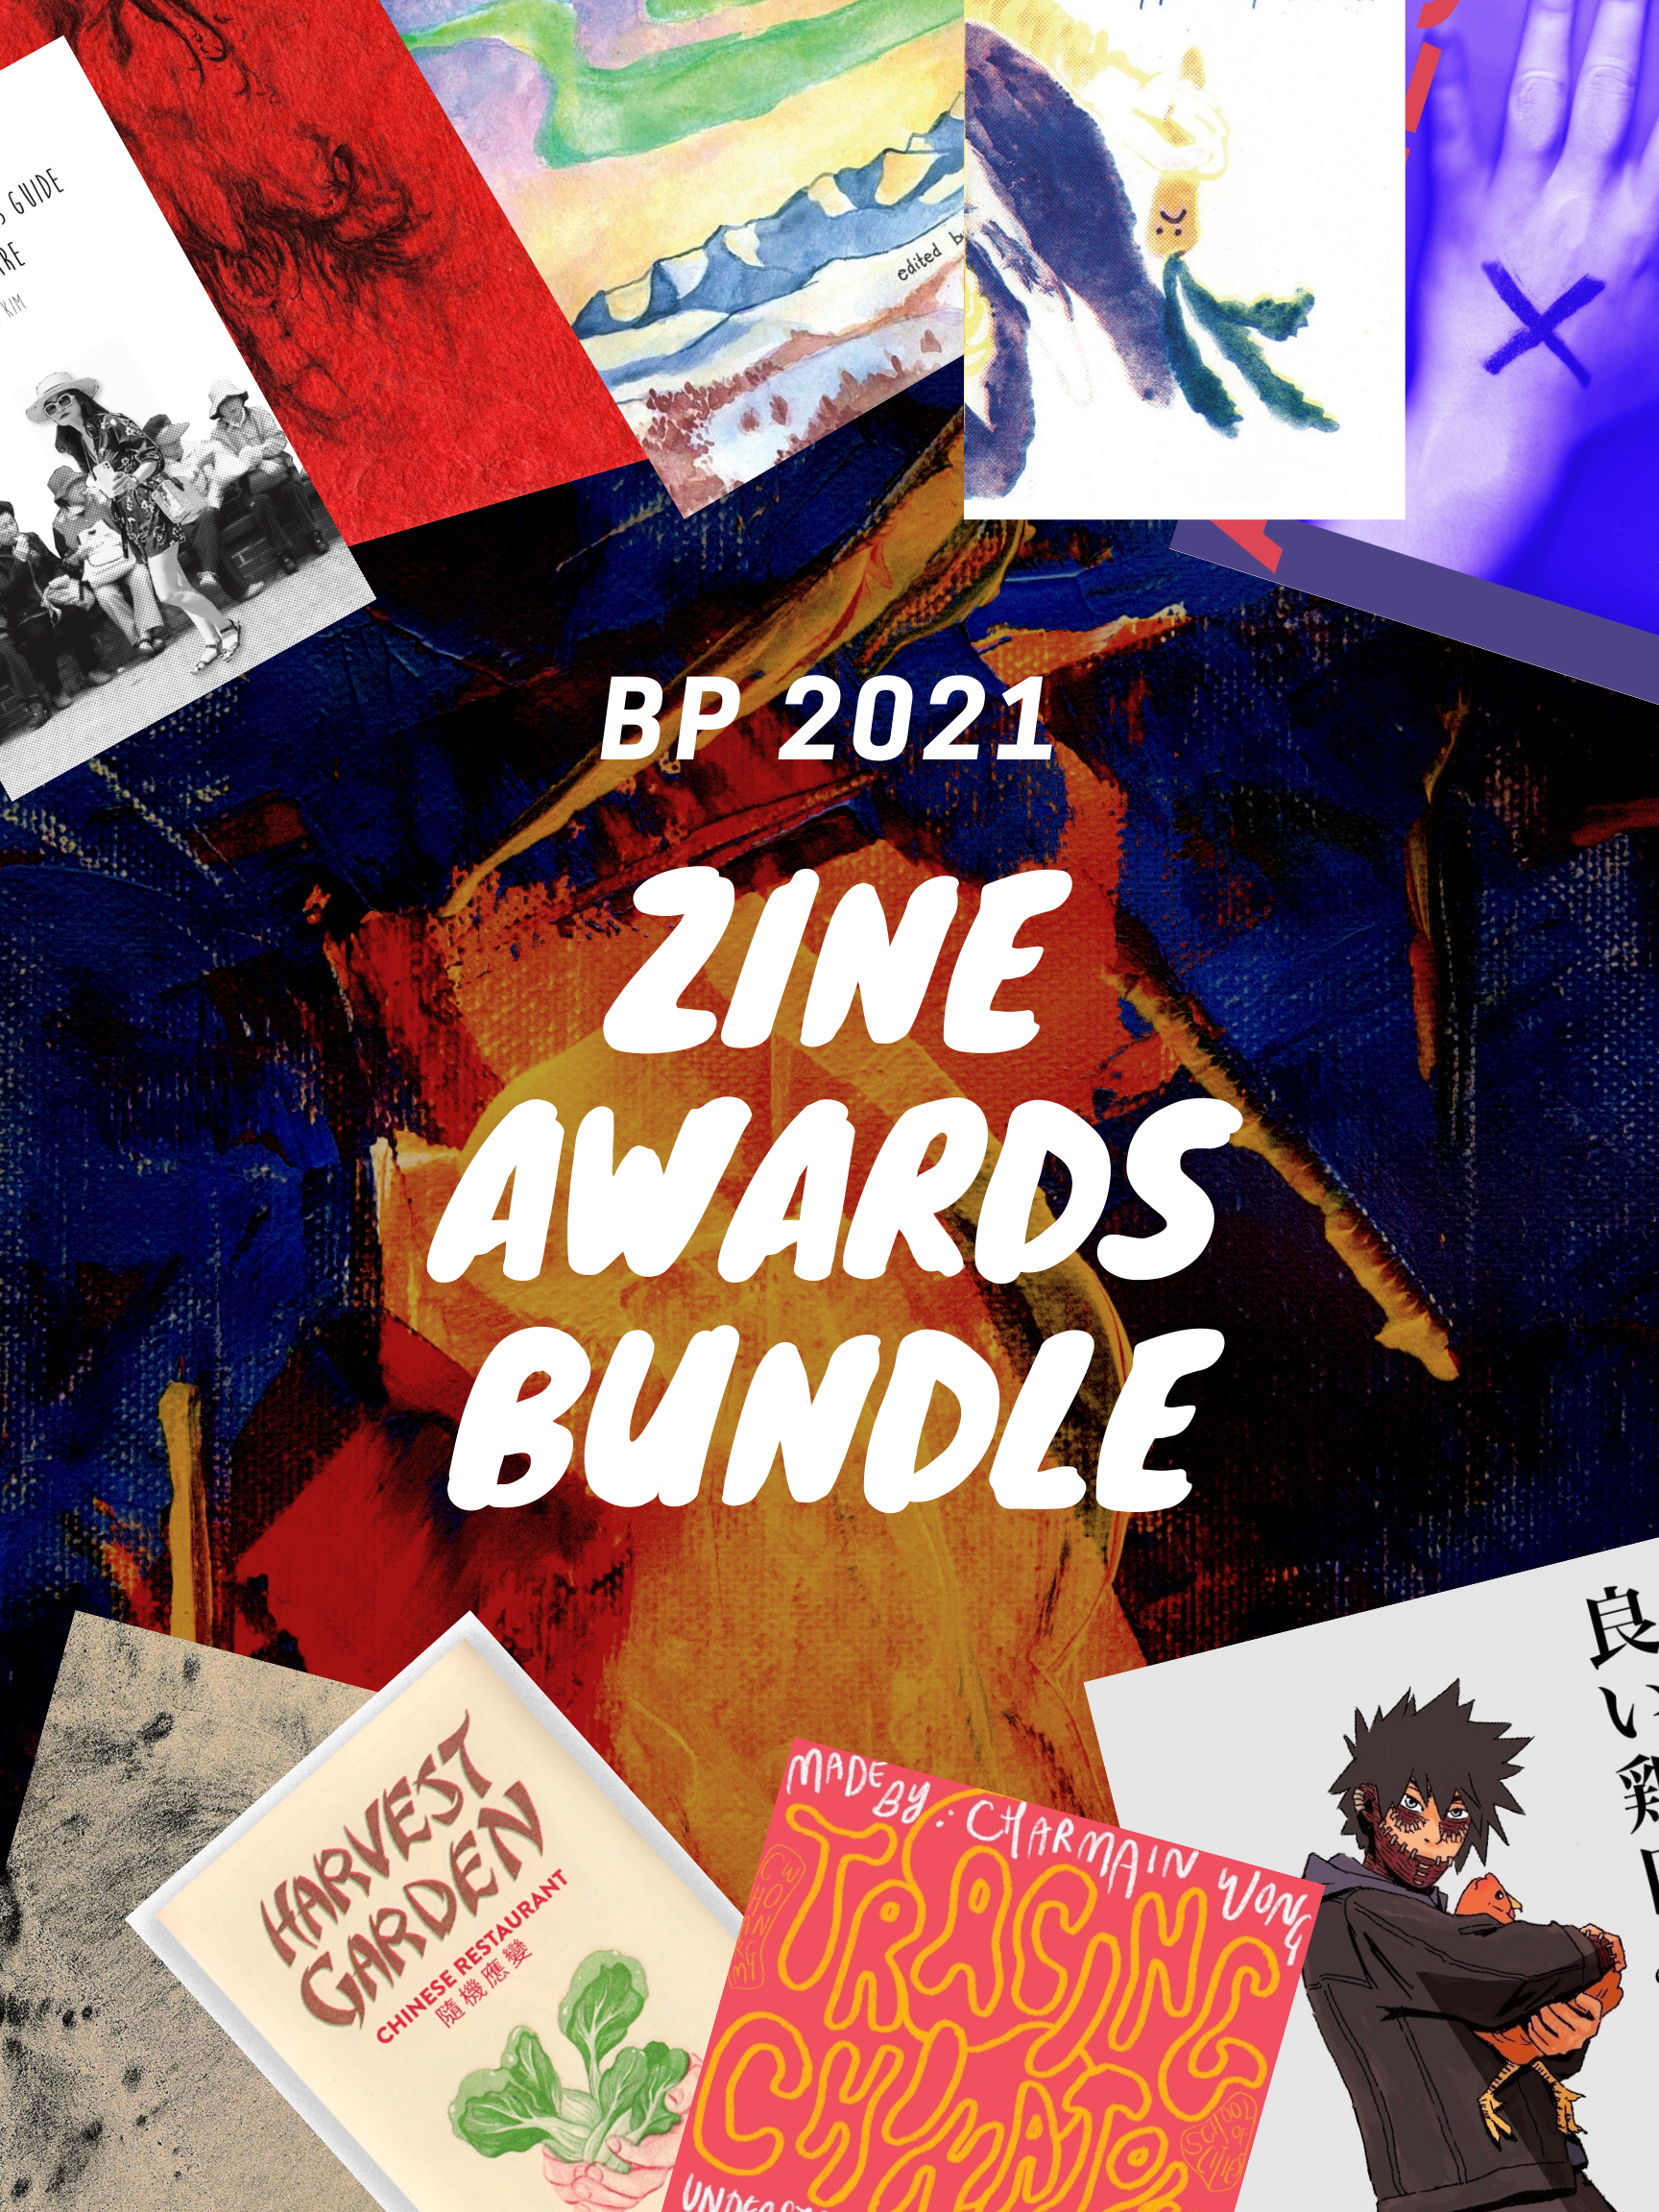 ZINE AWARDS WINNERS BUNDLE 2021